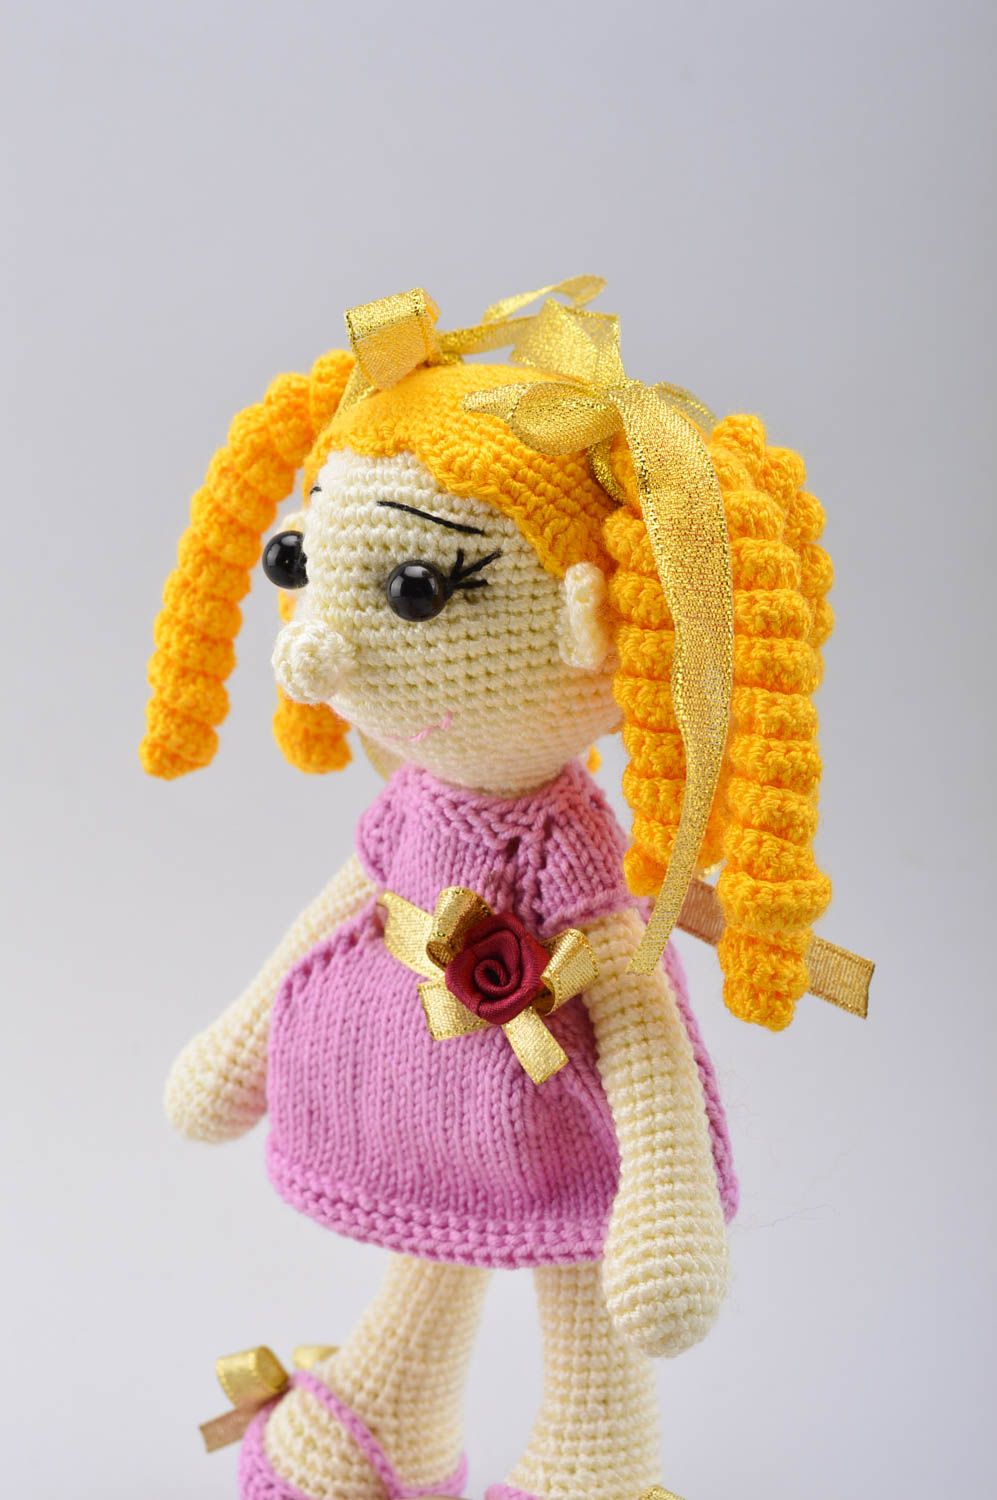 Handmade crochet doll designer doll unusual gift for baby nursery decor photo 5